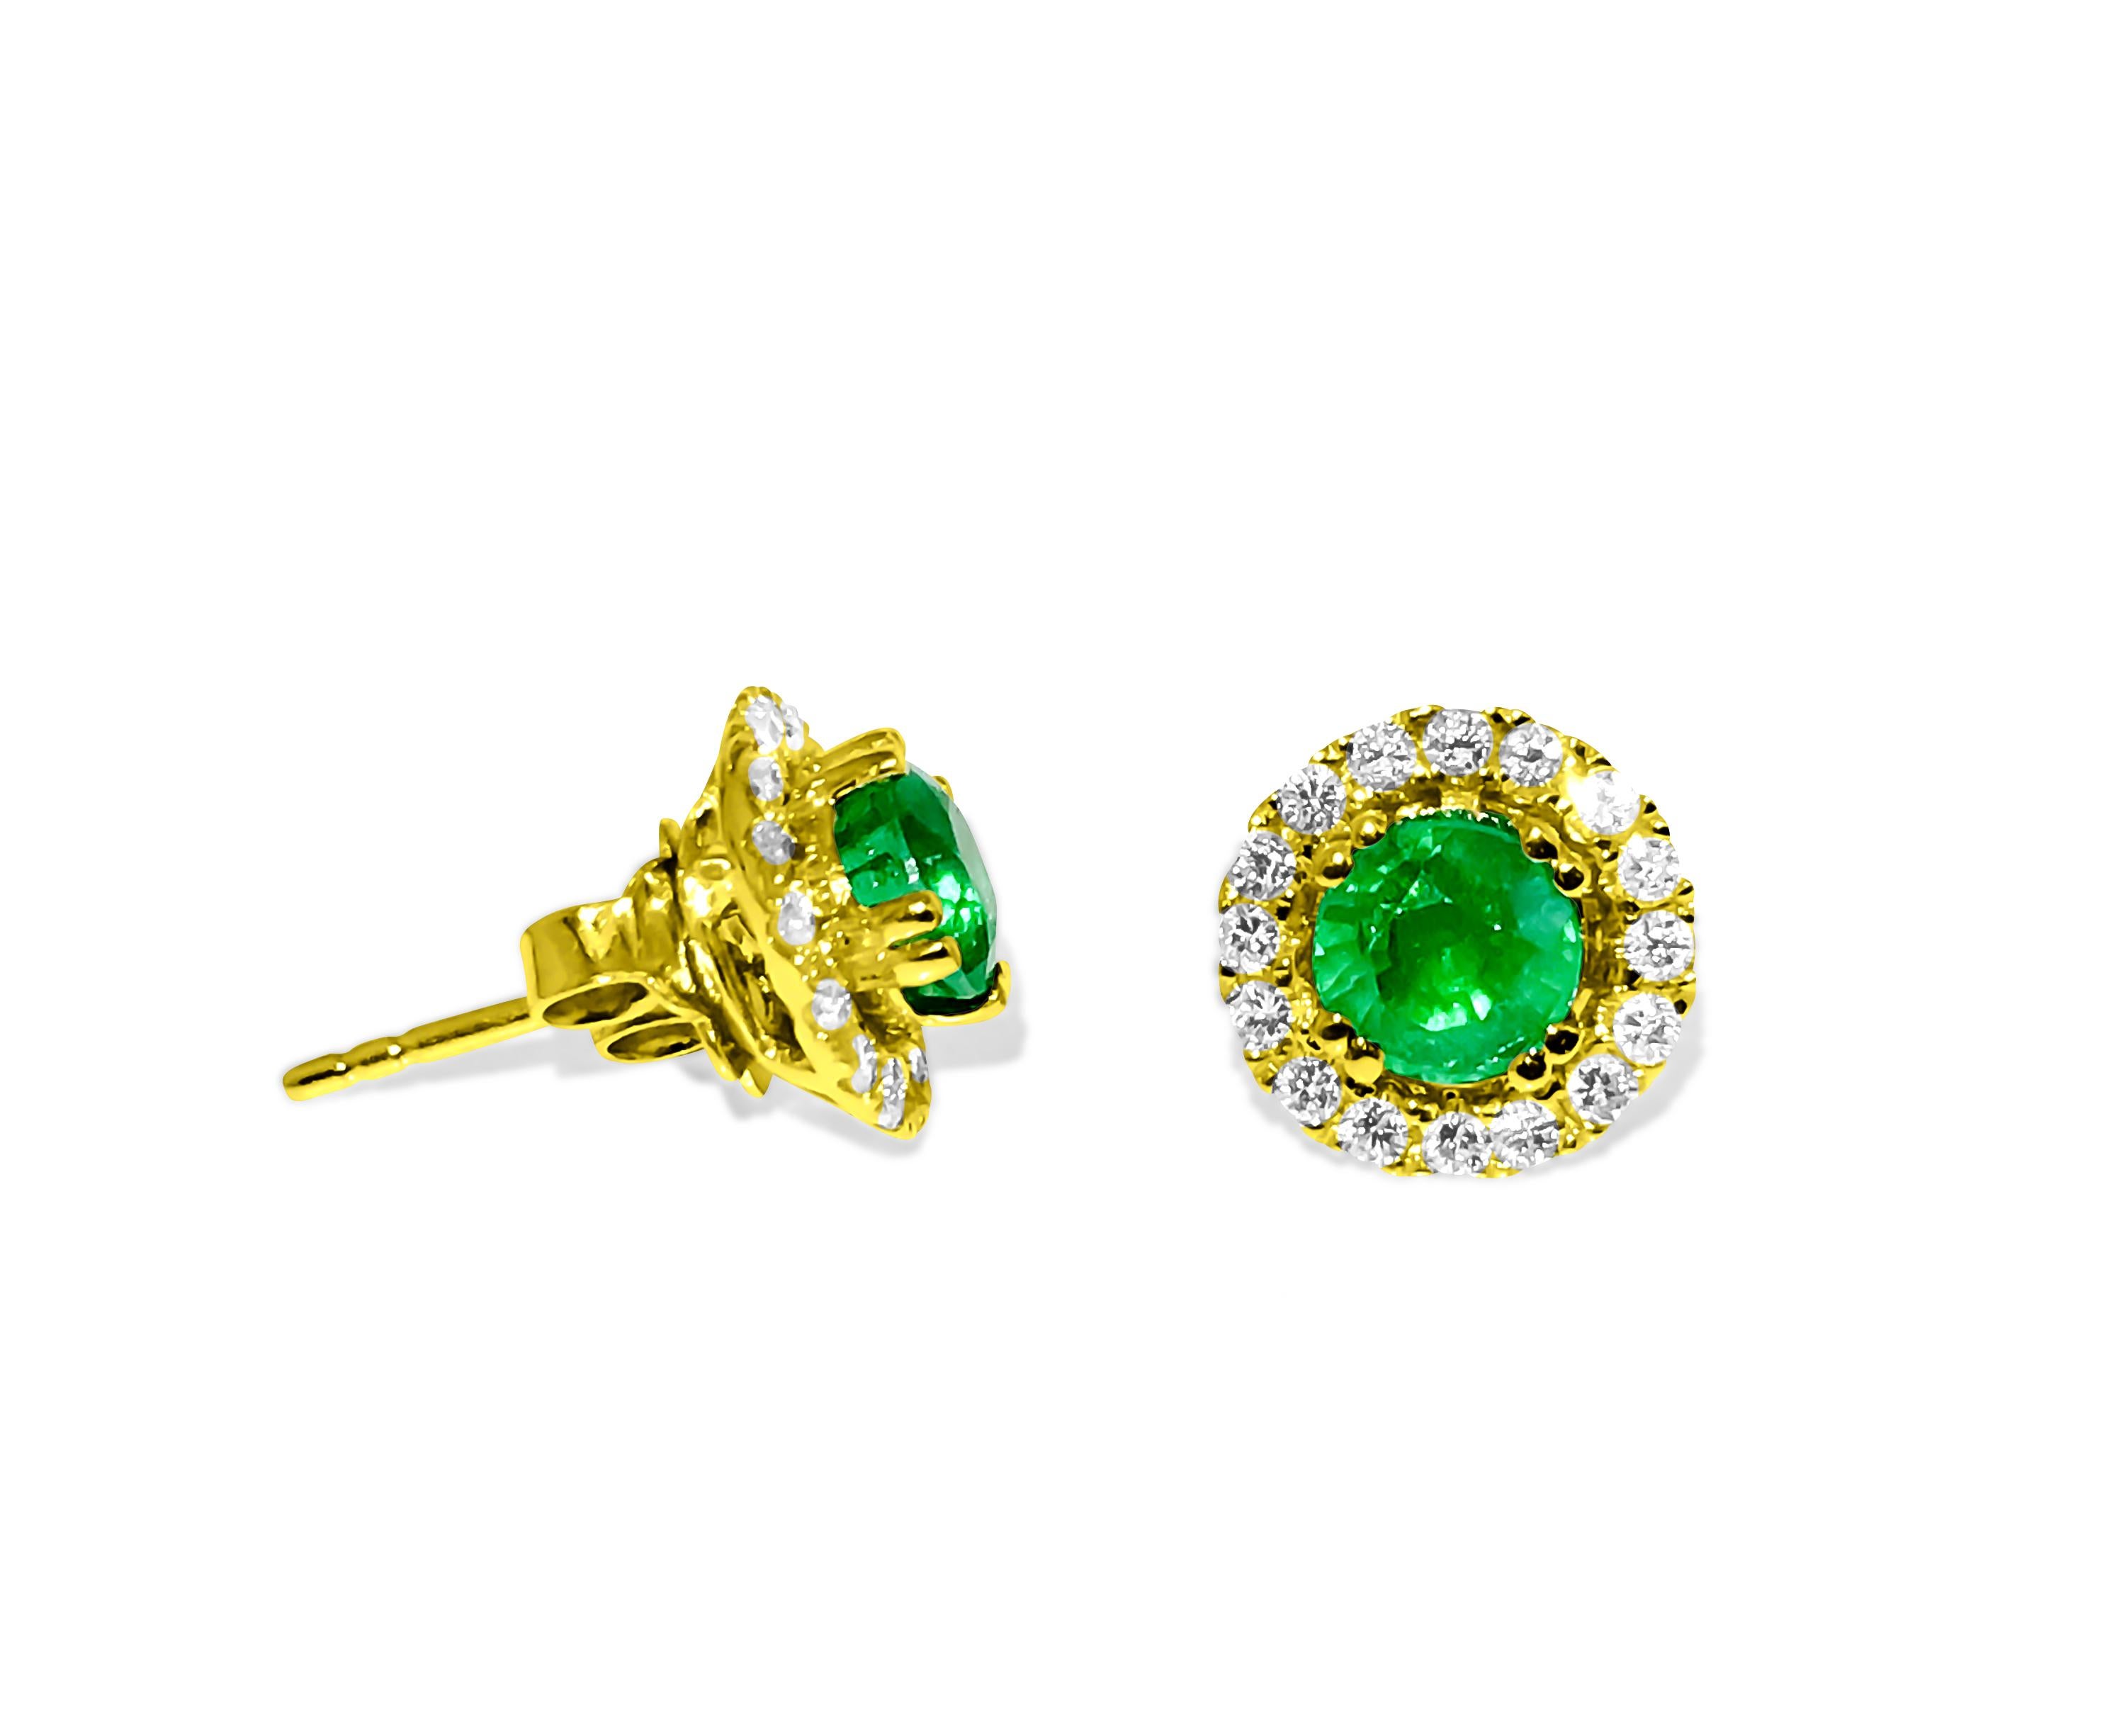 Brilliant Cut 2.90 Carat Emerald & G color Diamond Studs in 14K Gold For Sale